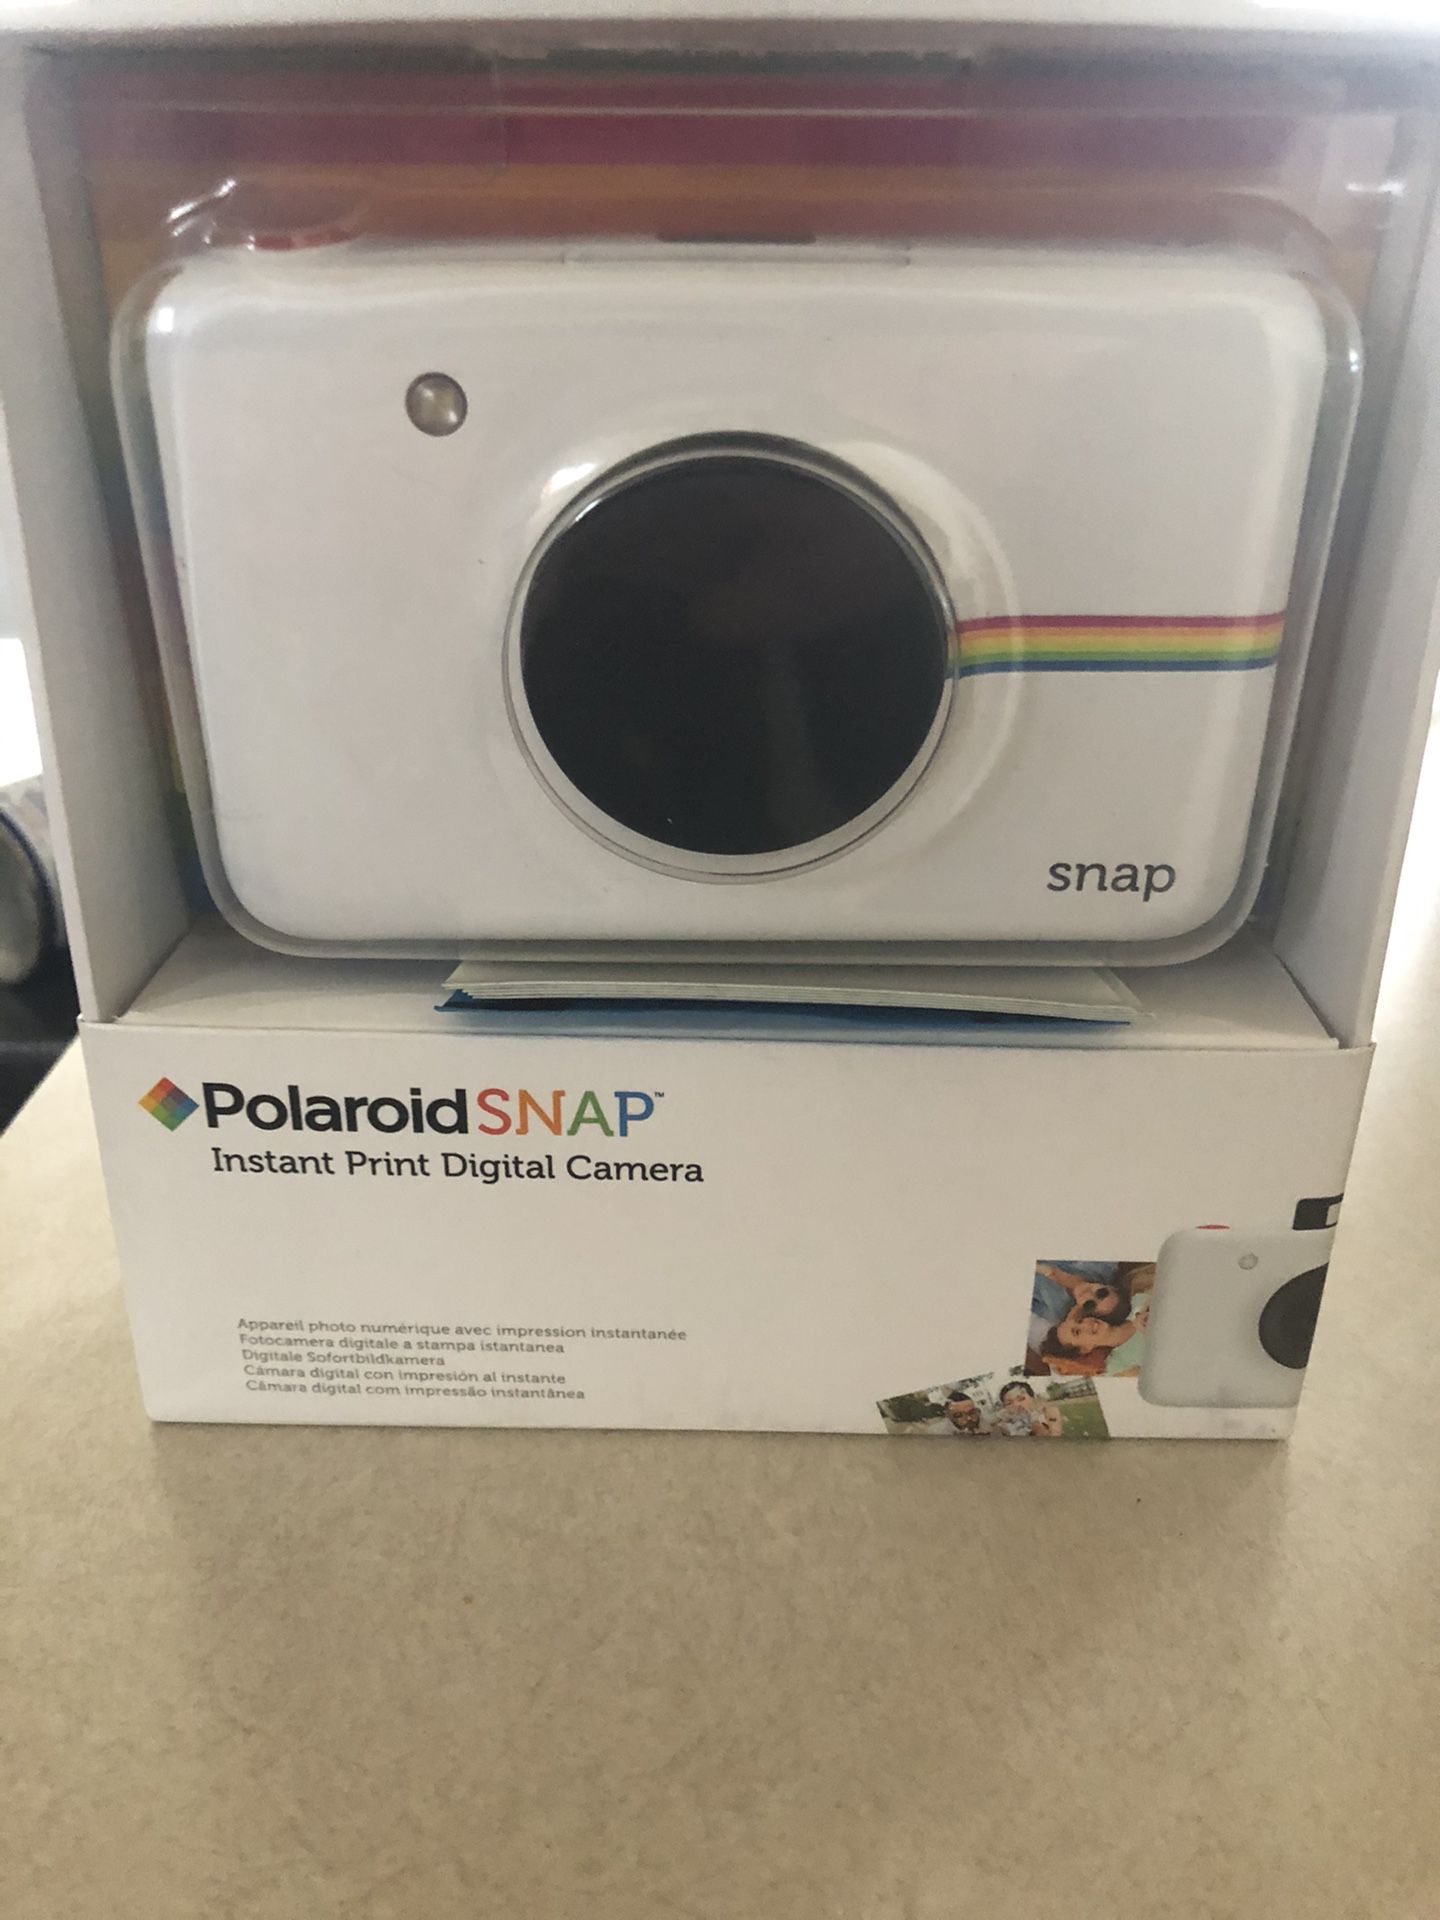 Polaroid Snap Instant Print Digital Camera - new in box